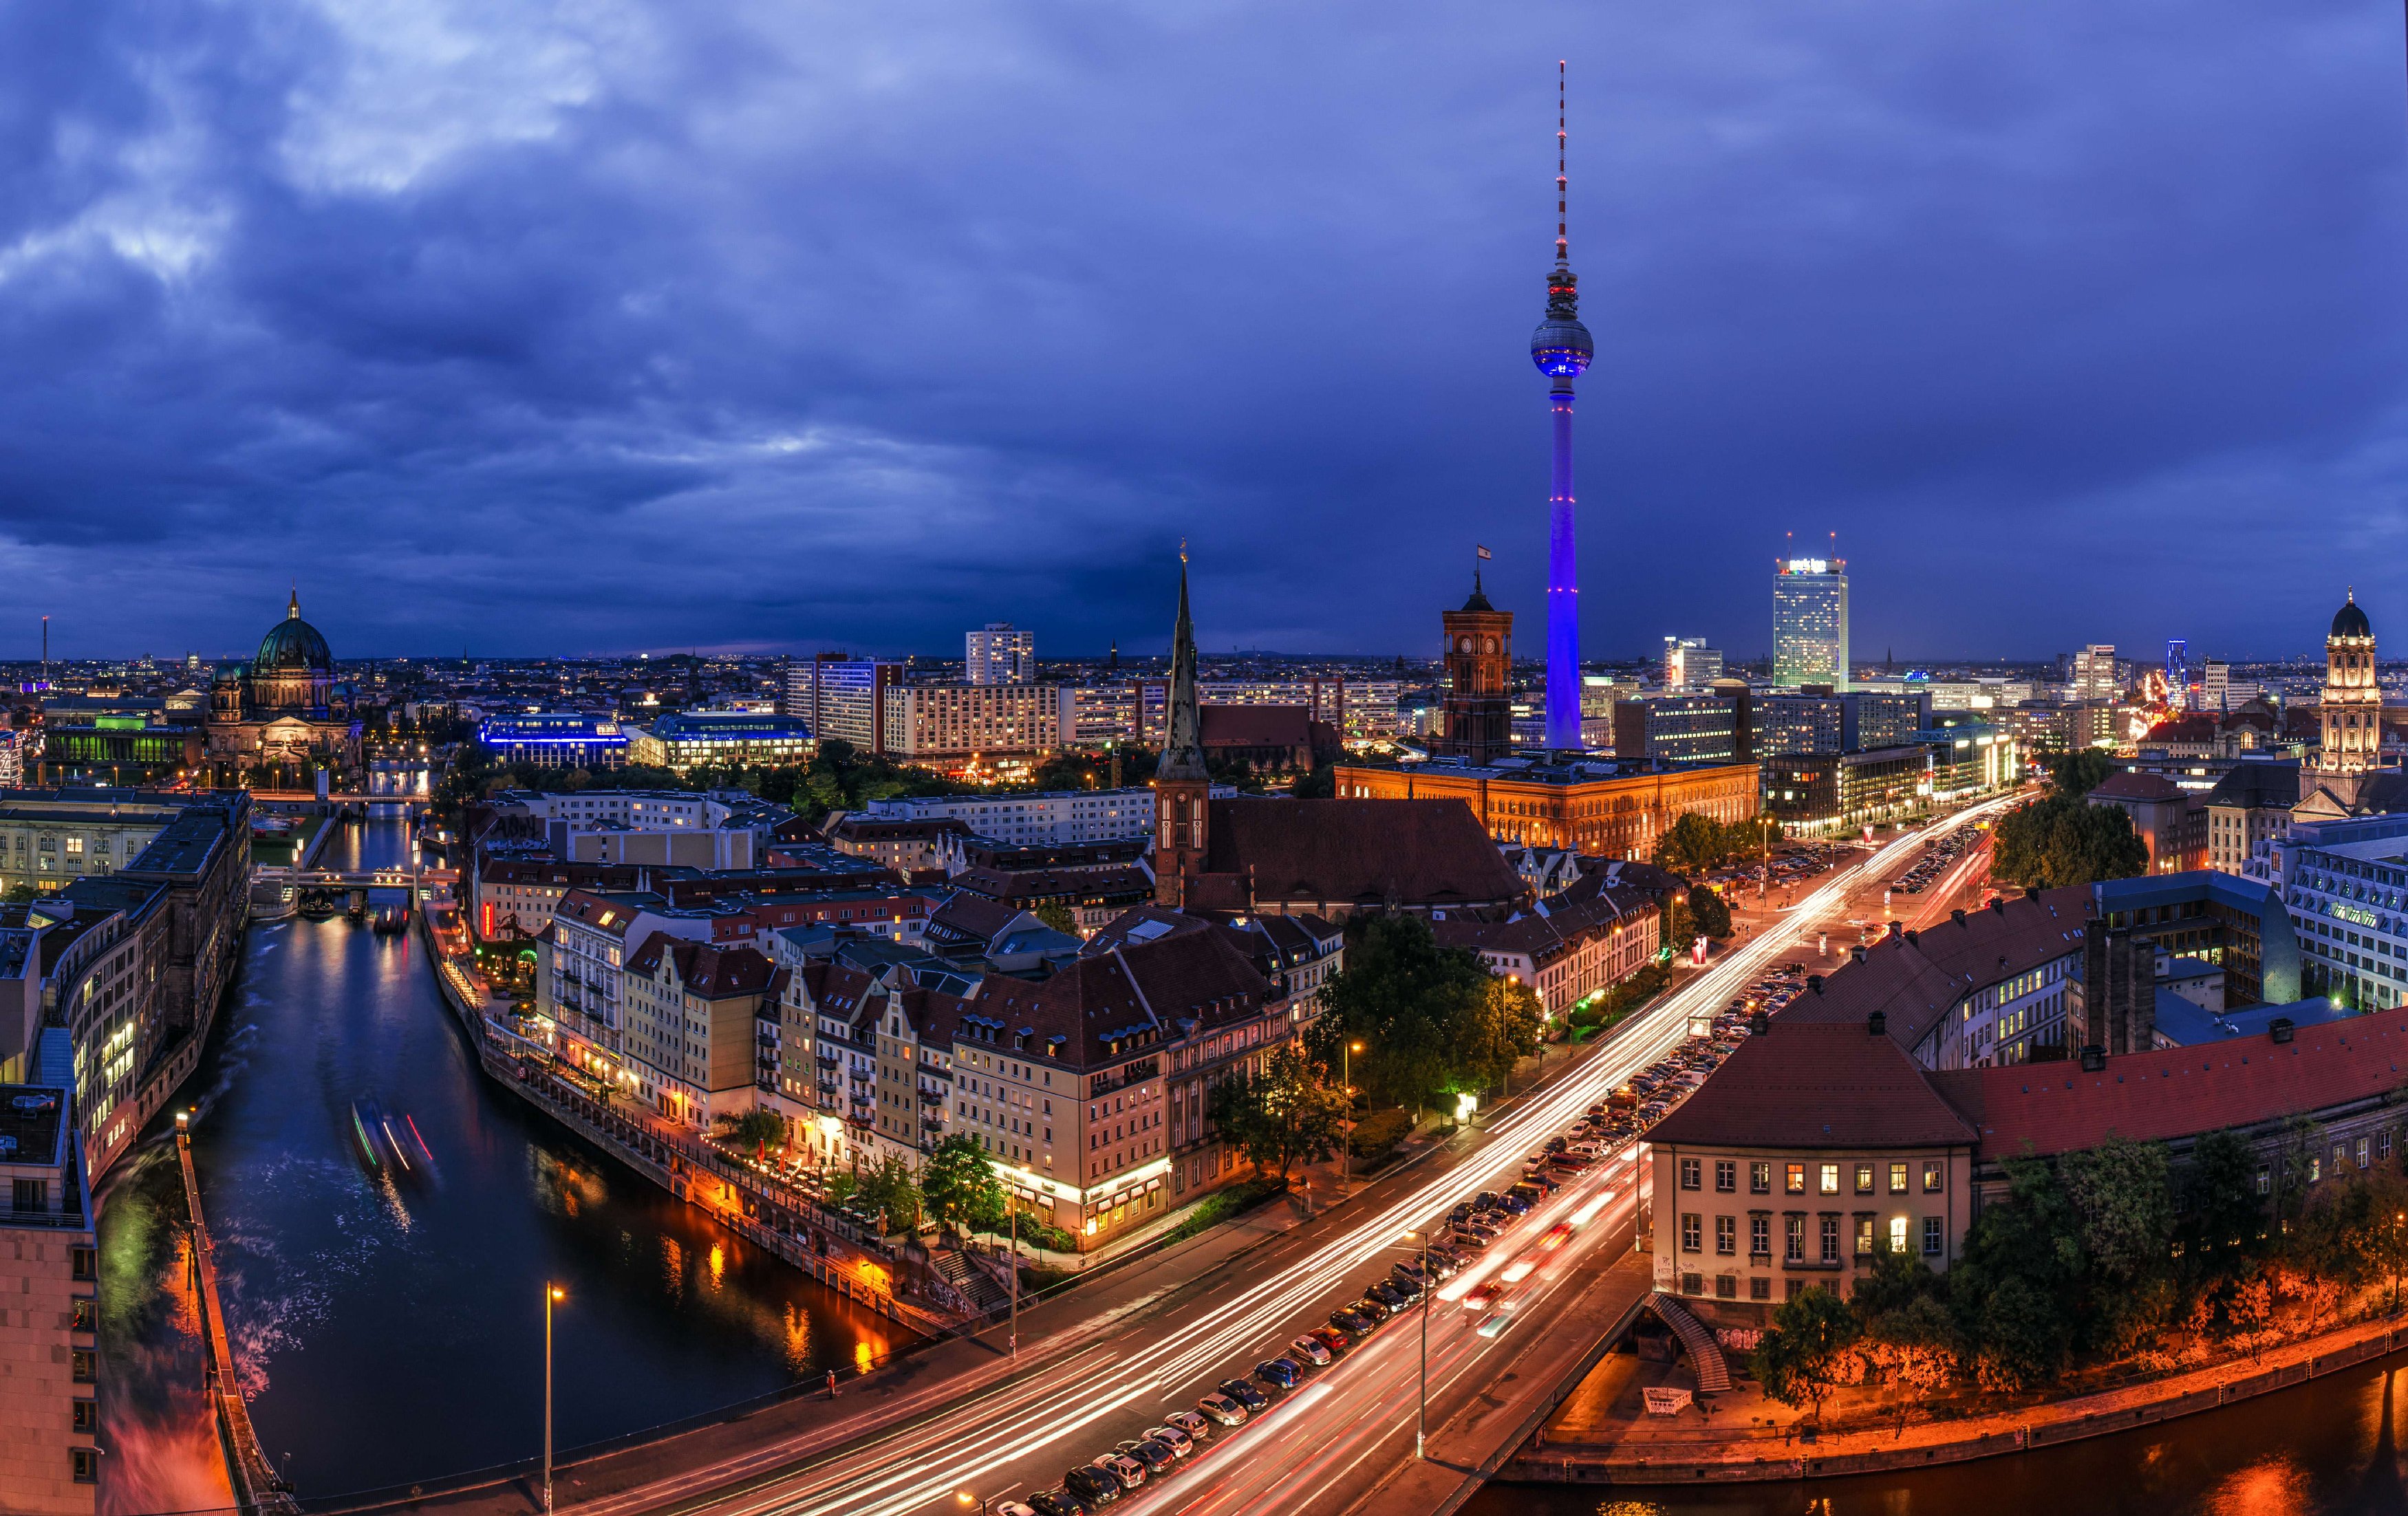 Германия. Берлин столица Германии. Изображение Берлина – столицы Германии.. Берлин панорама. Столица Германии Берлин фото.